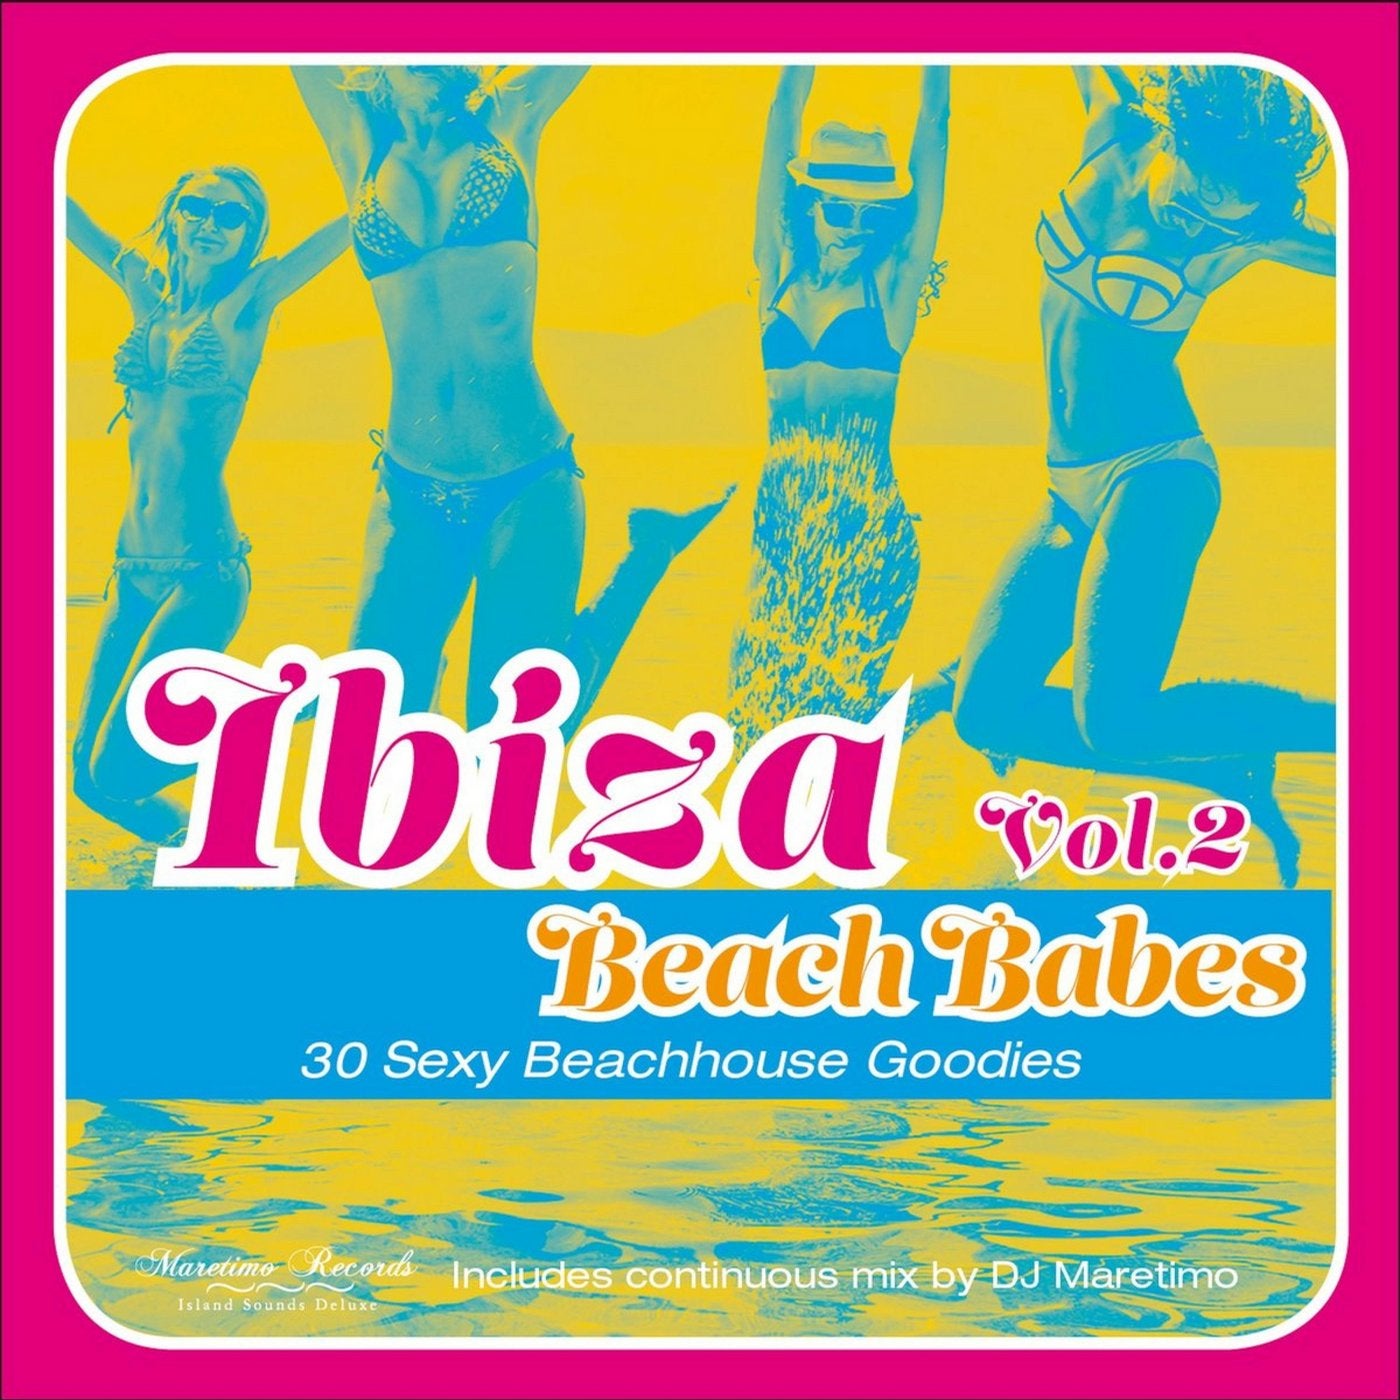 Ibiza Beach Babes, Vol. 2 - 30 Sexy Beachhouse Goodies